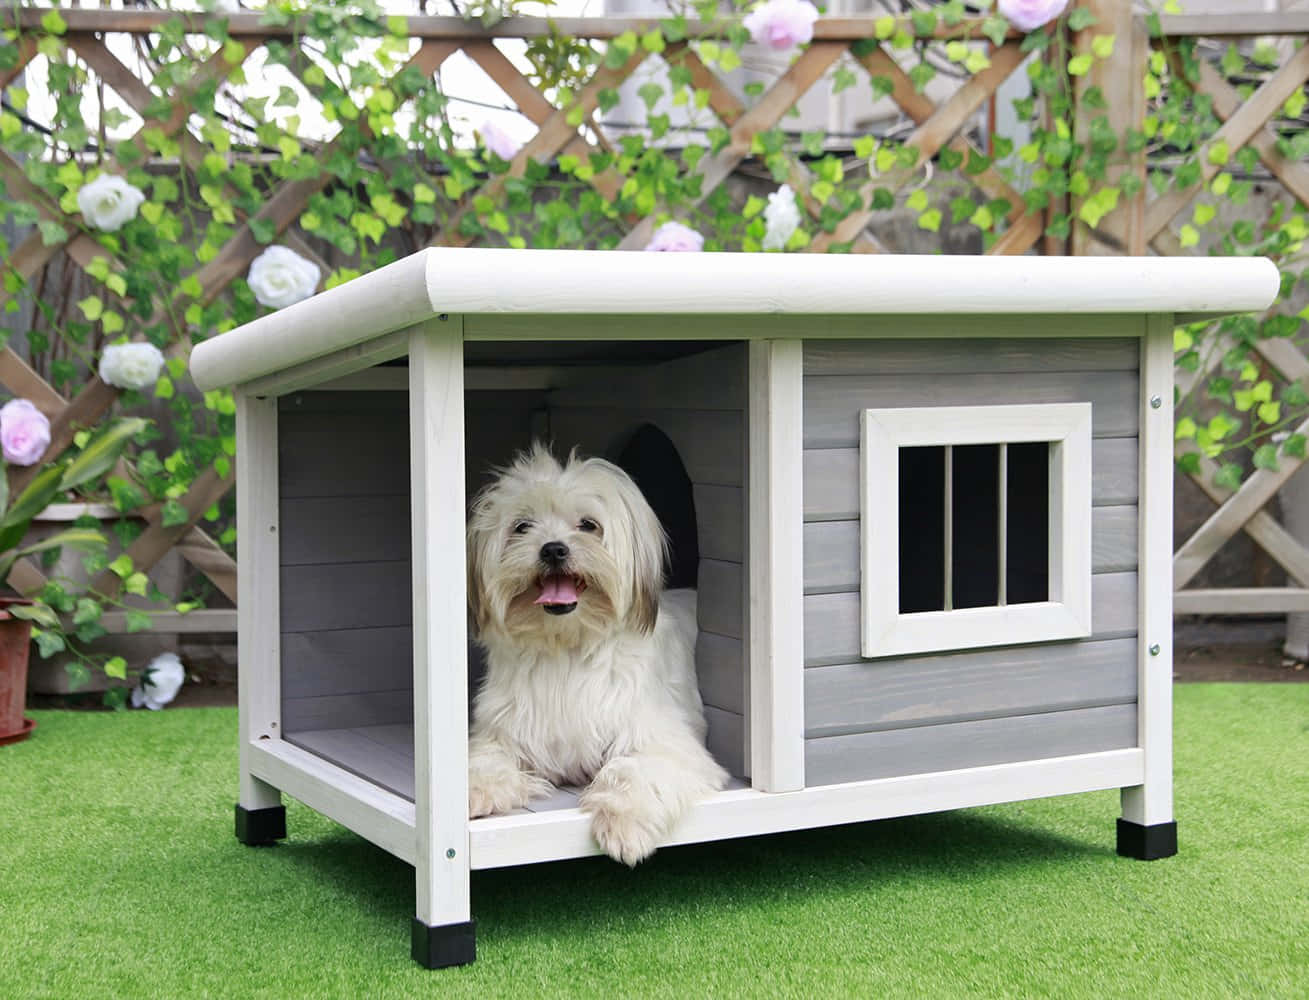 Caption: Cozy Dog House in the Garden